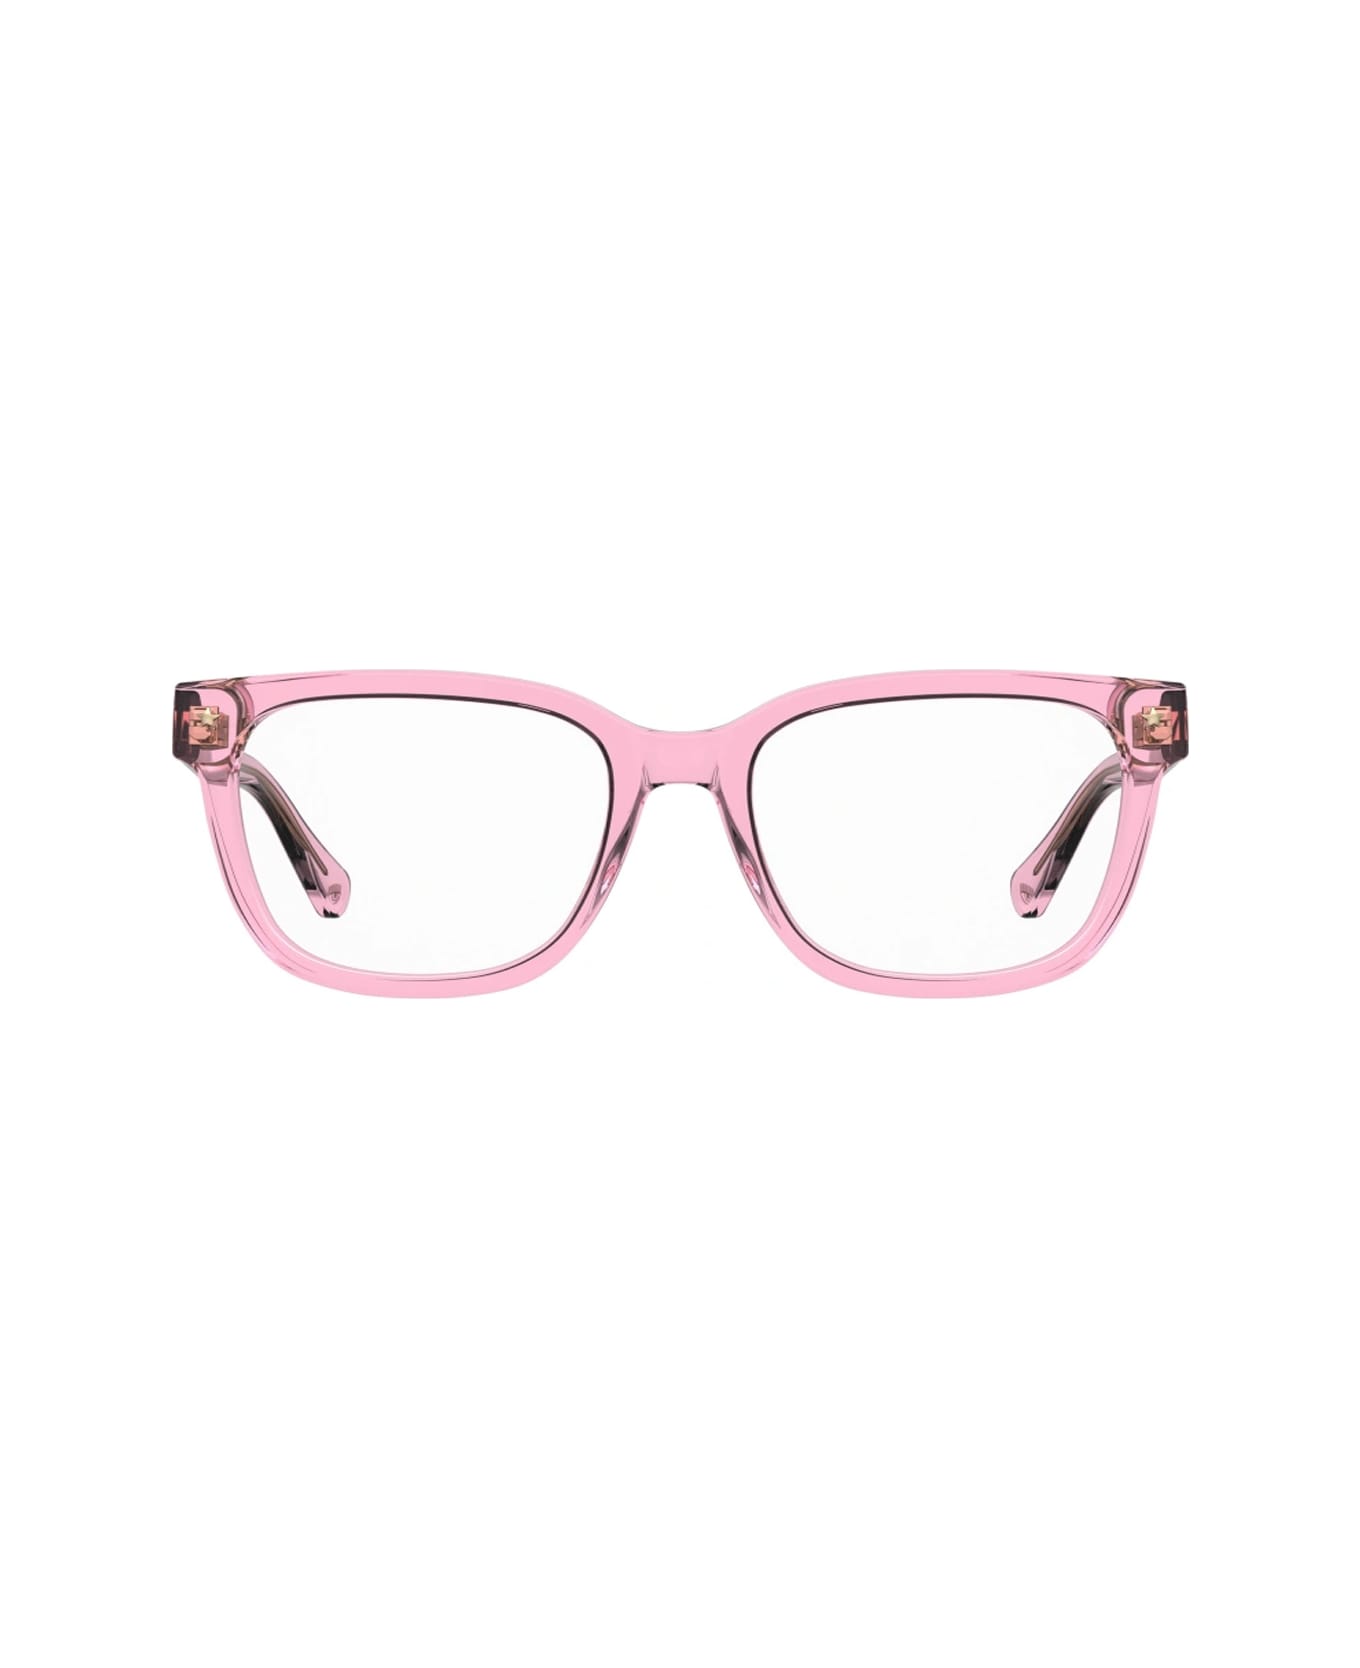 Chiara Ferragni Cf 7027 35j/18 Pink Glasses - Rosa アイウェア